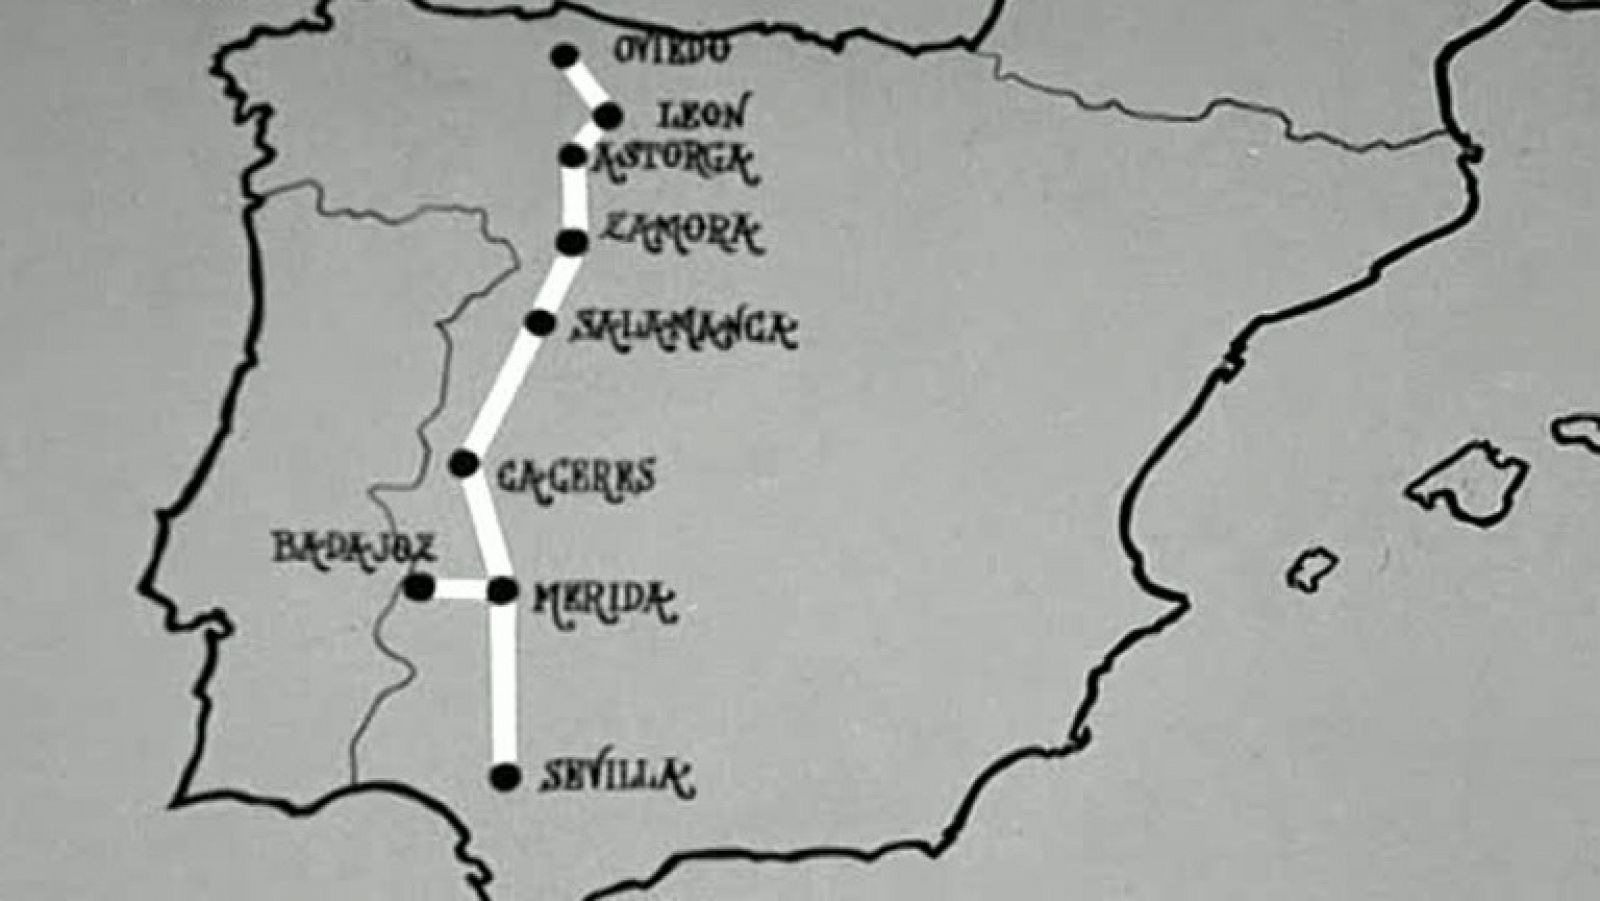 Conozca usted España - La ruta de la plata